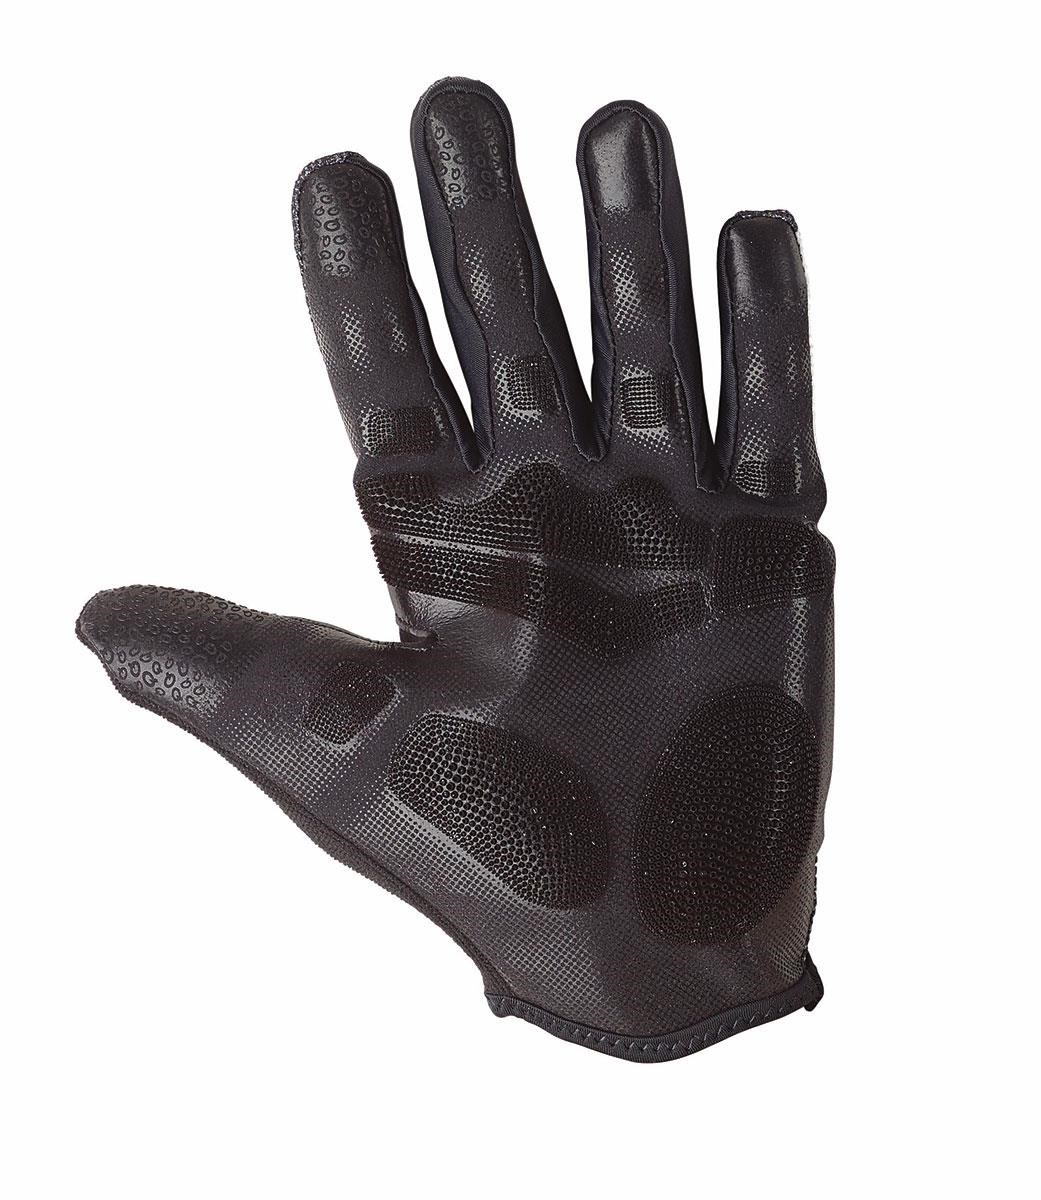 Prologo Long Piquet Long Finger Gloves